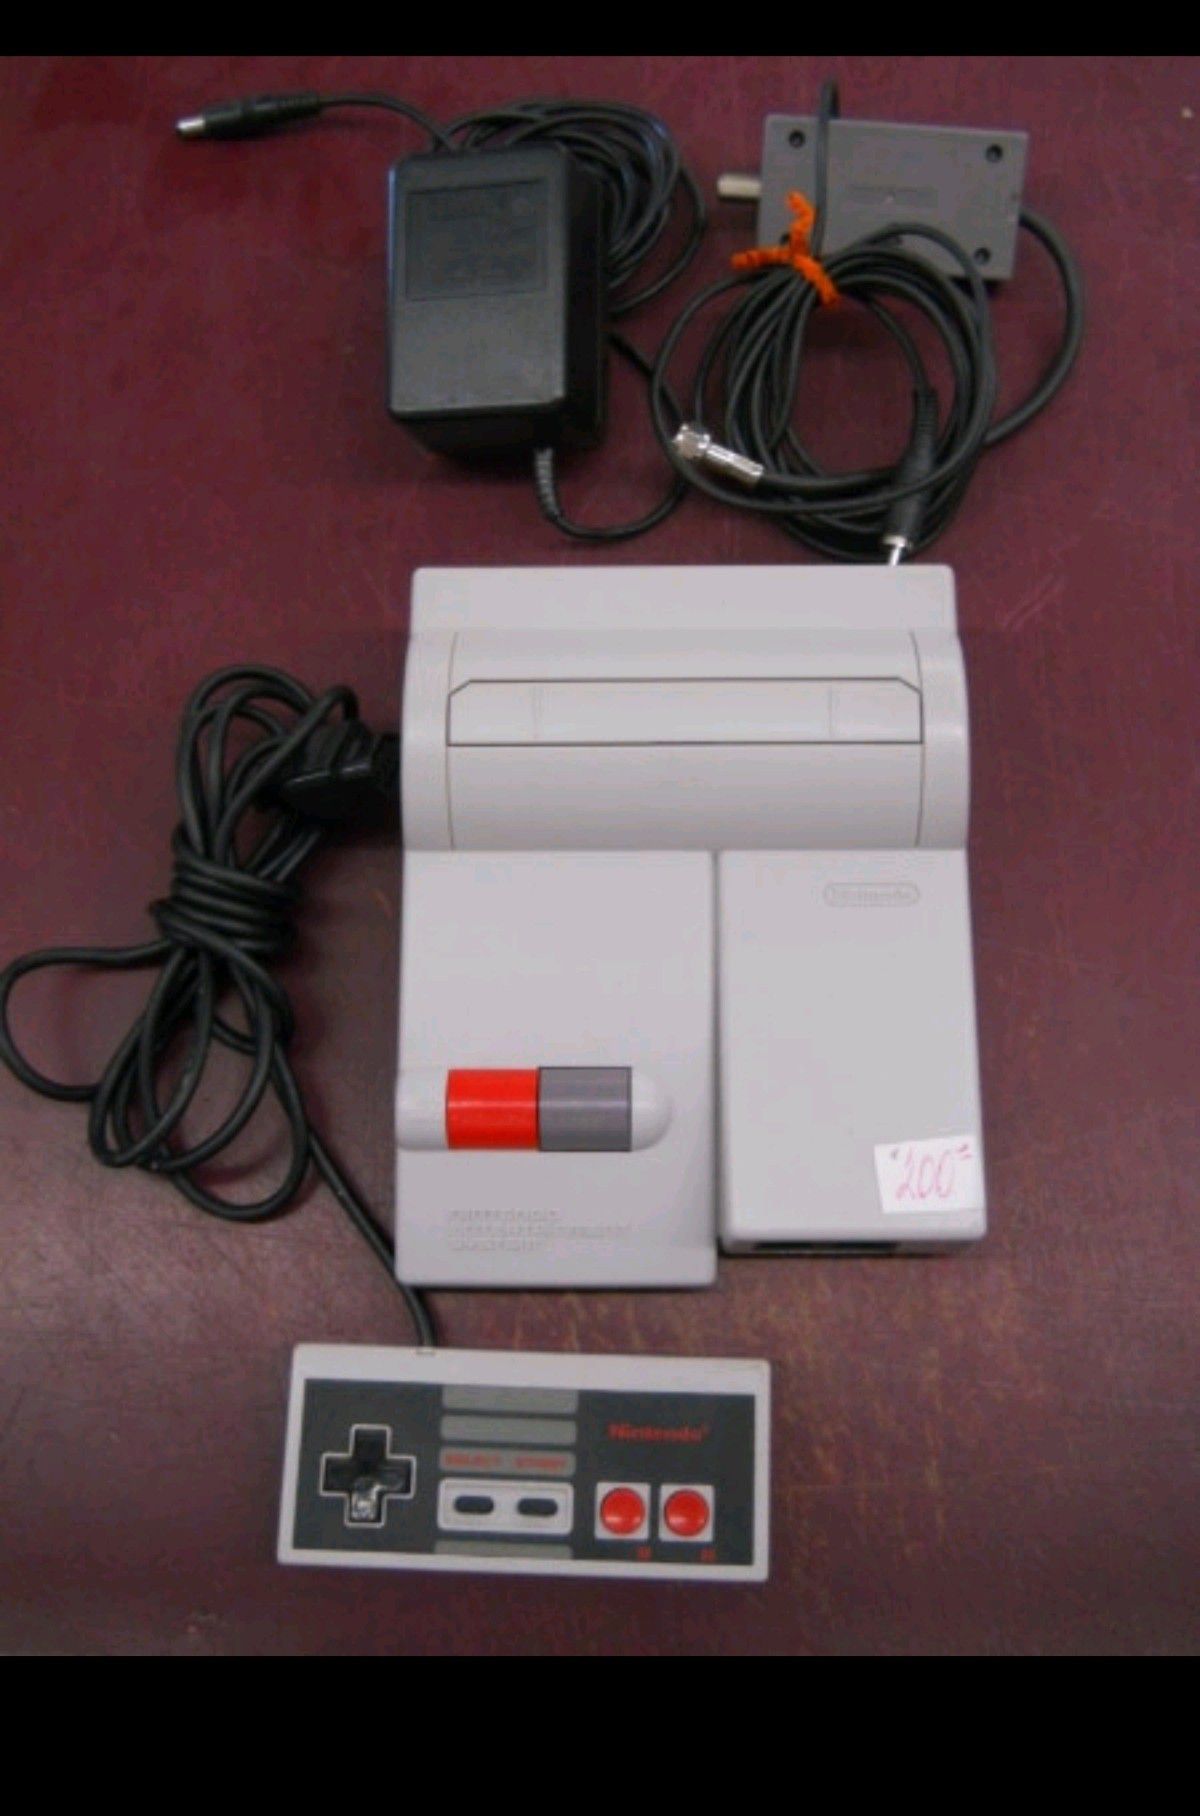 NES 8-bit Game System Nintendo Original Top Load NES-101